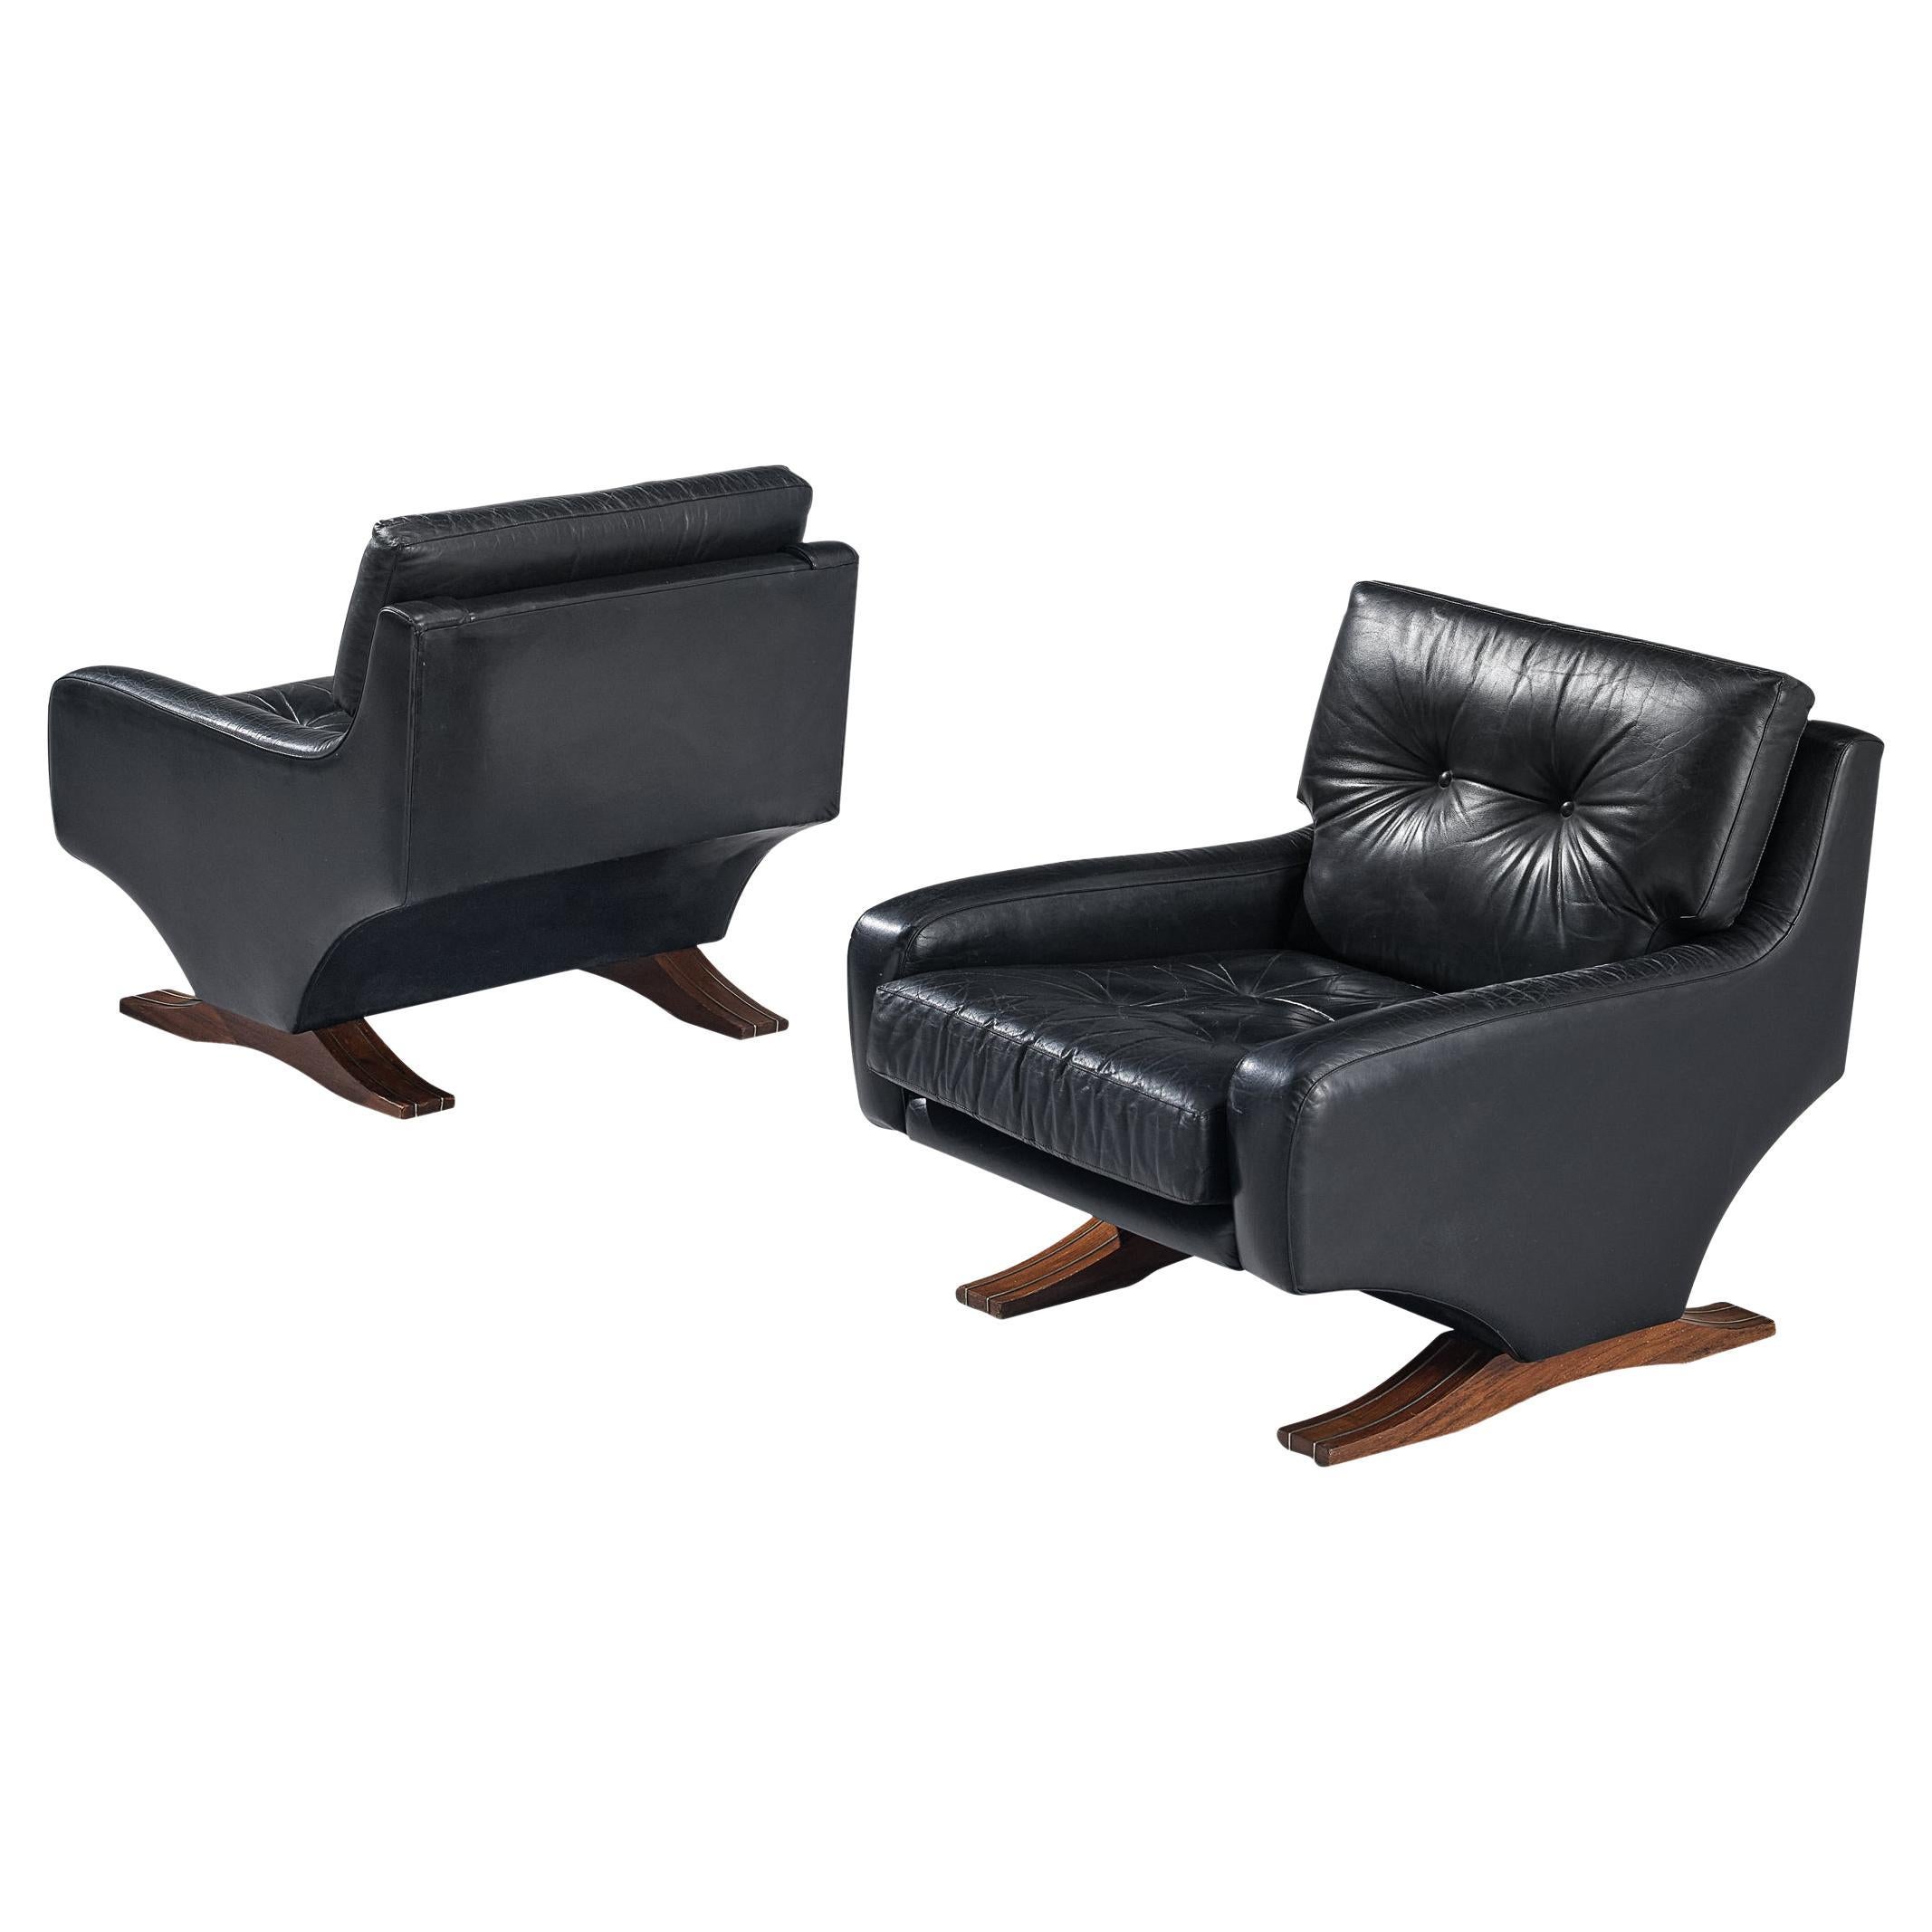 Franz Sartori for Flexform Pair of Armchairs in Black Leather